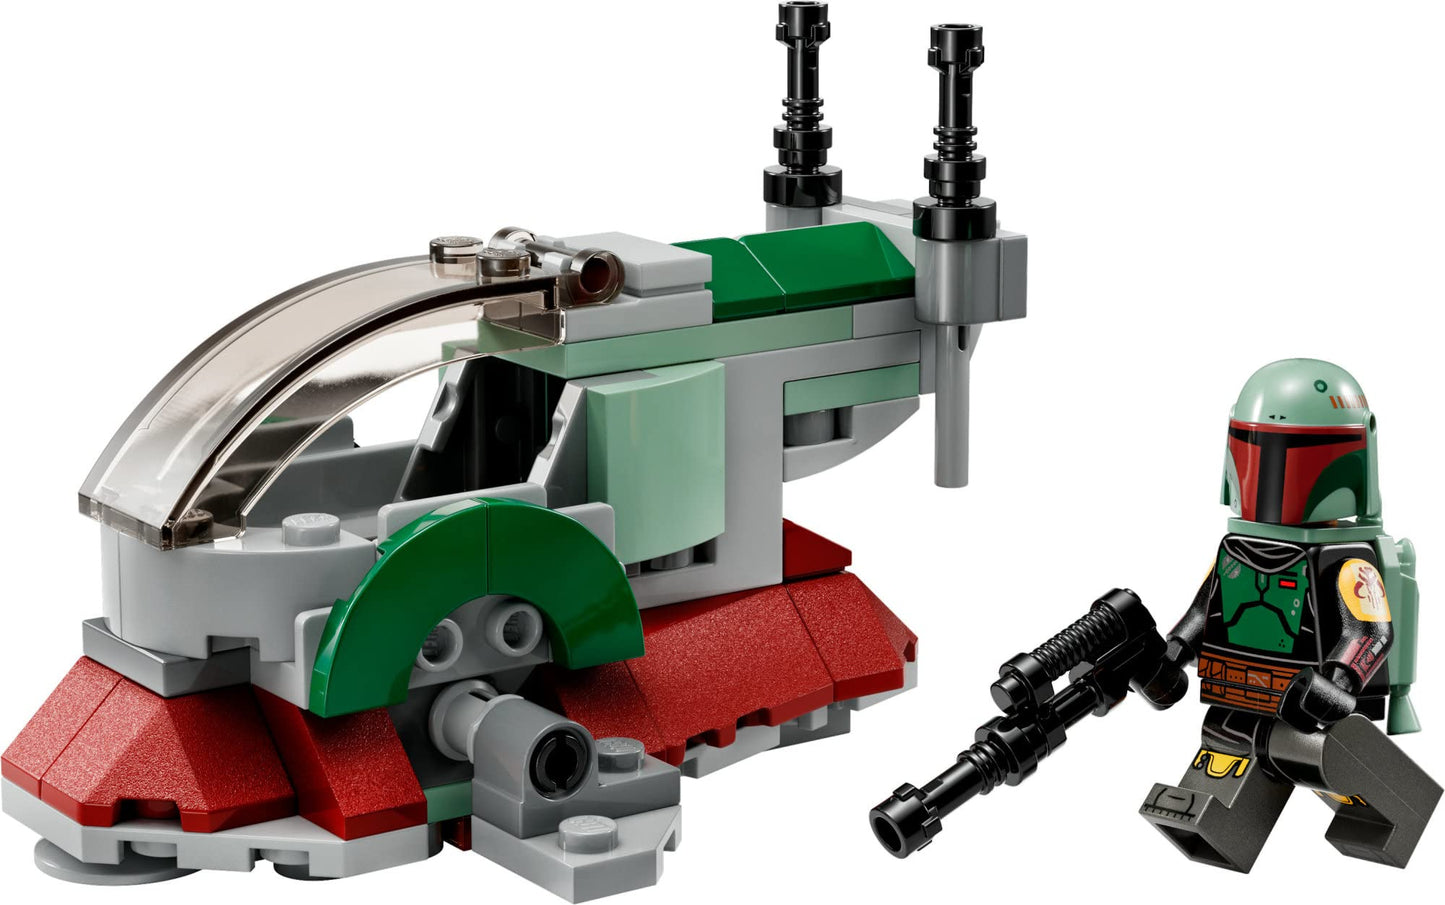 LEGO Star Wars Boba Fett\'s Starship Microfighter Set 75344